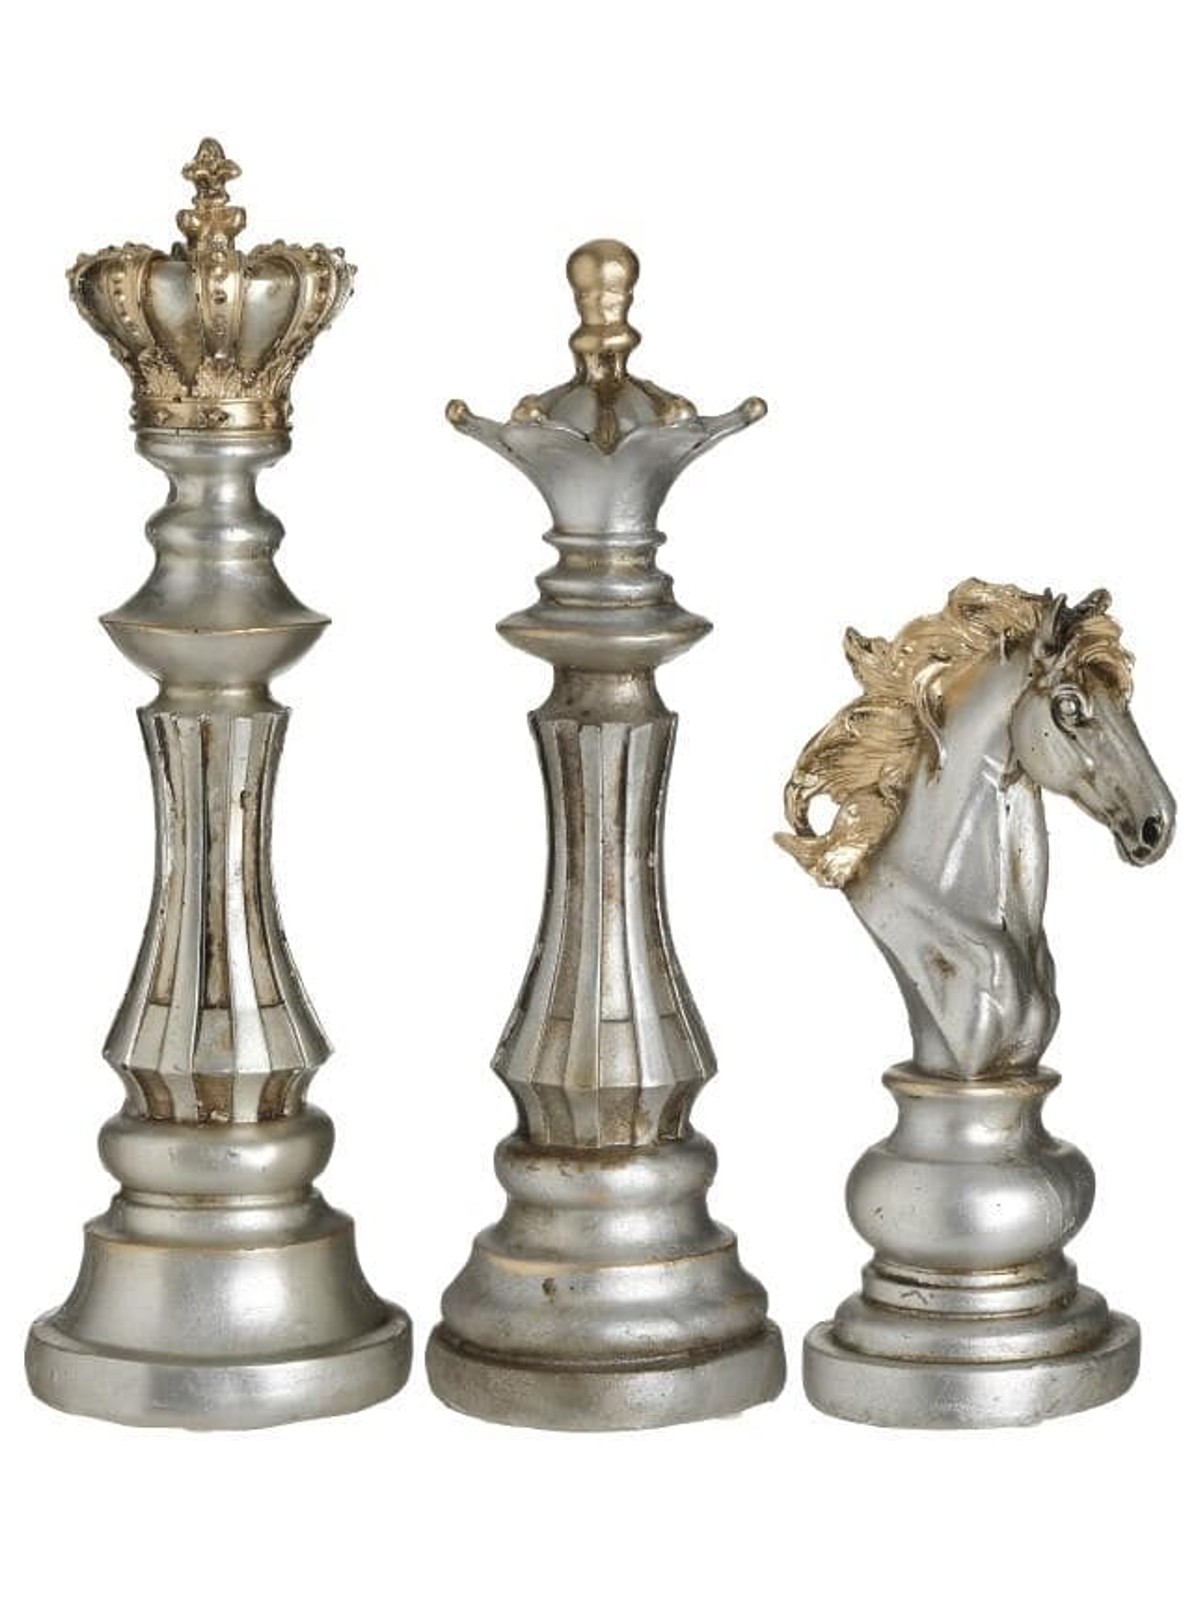 “Soldier” chess piece